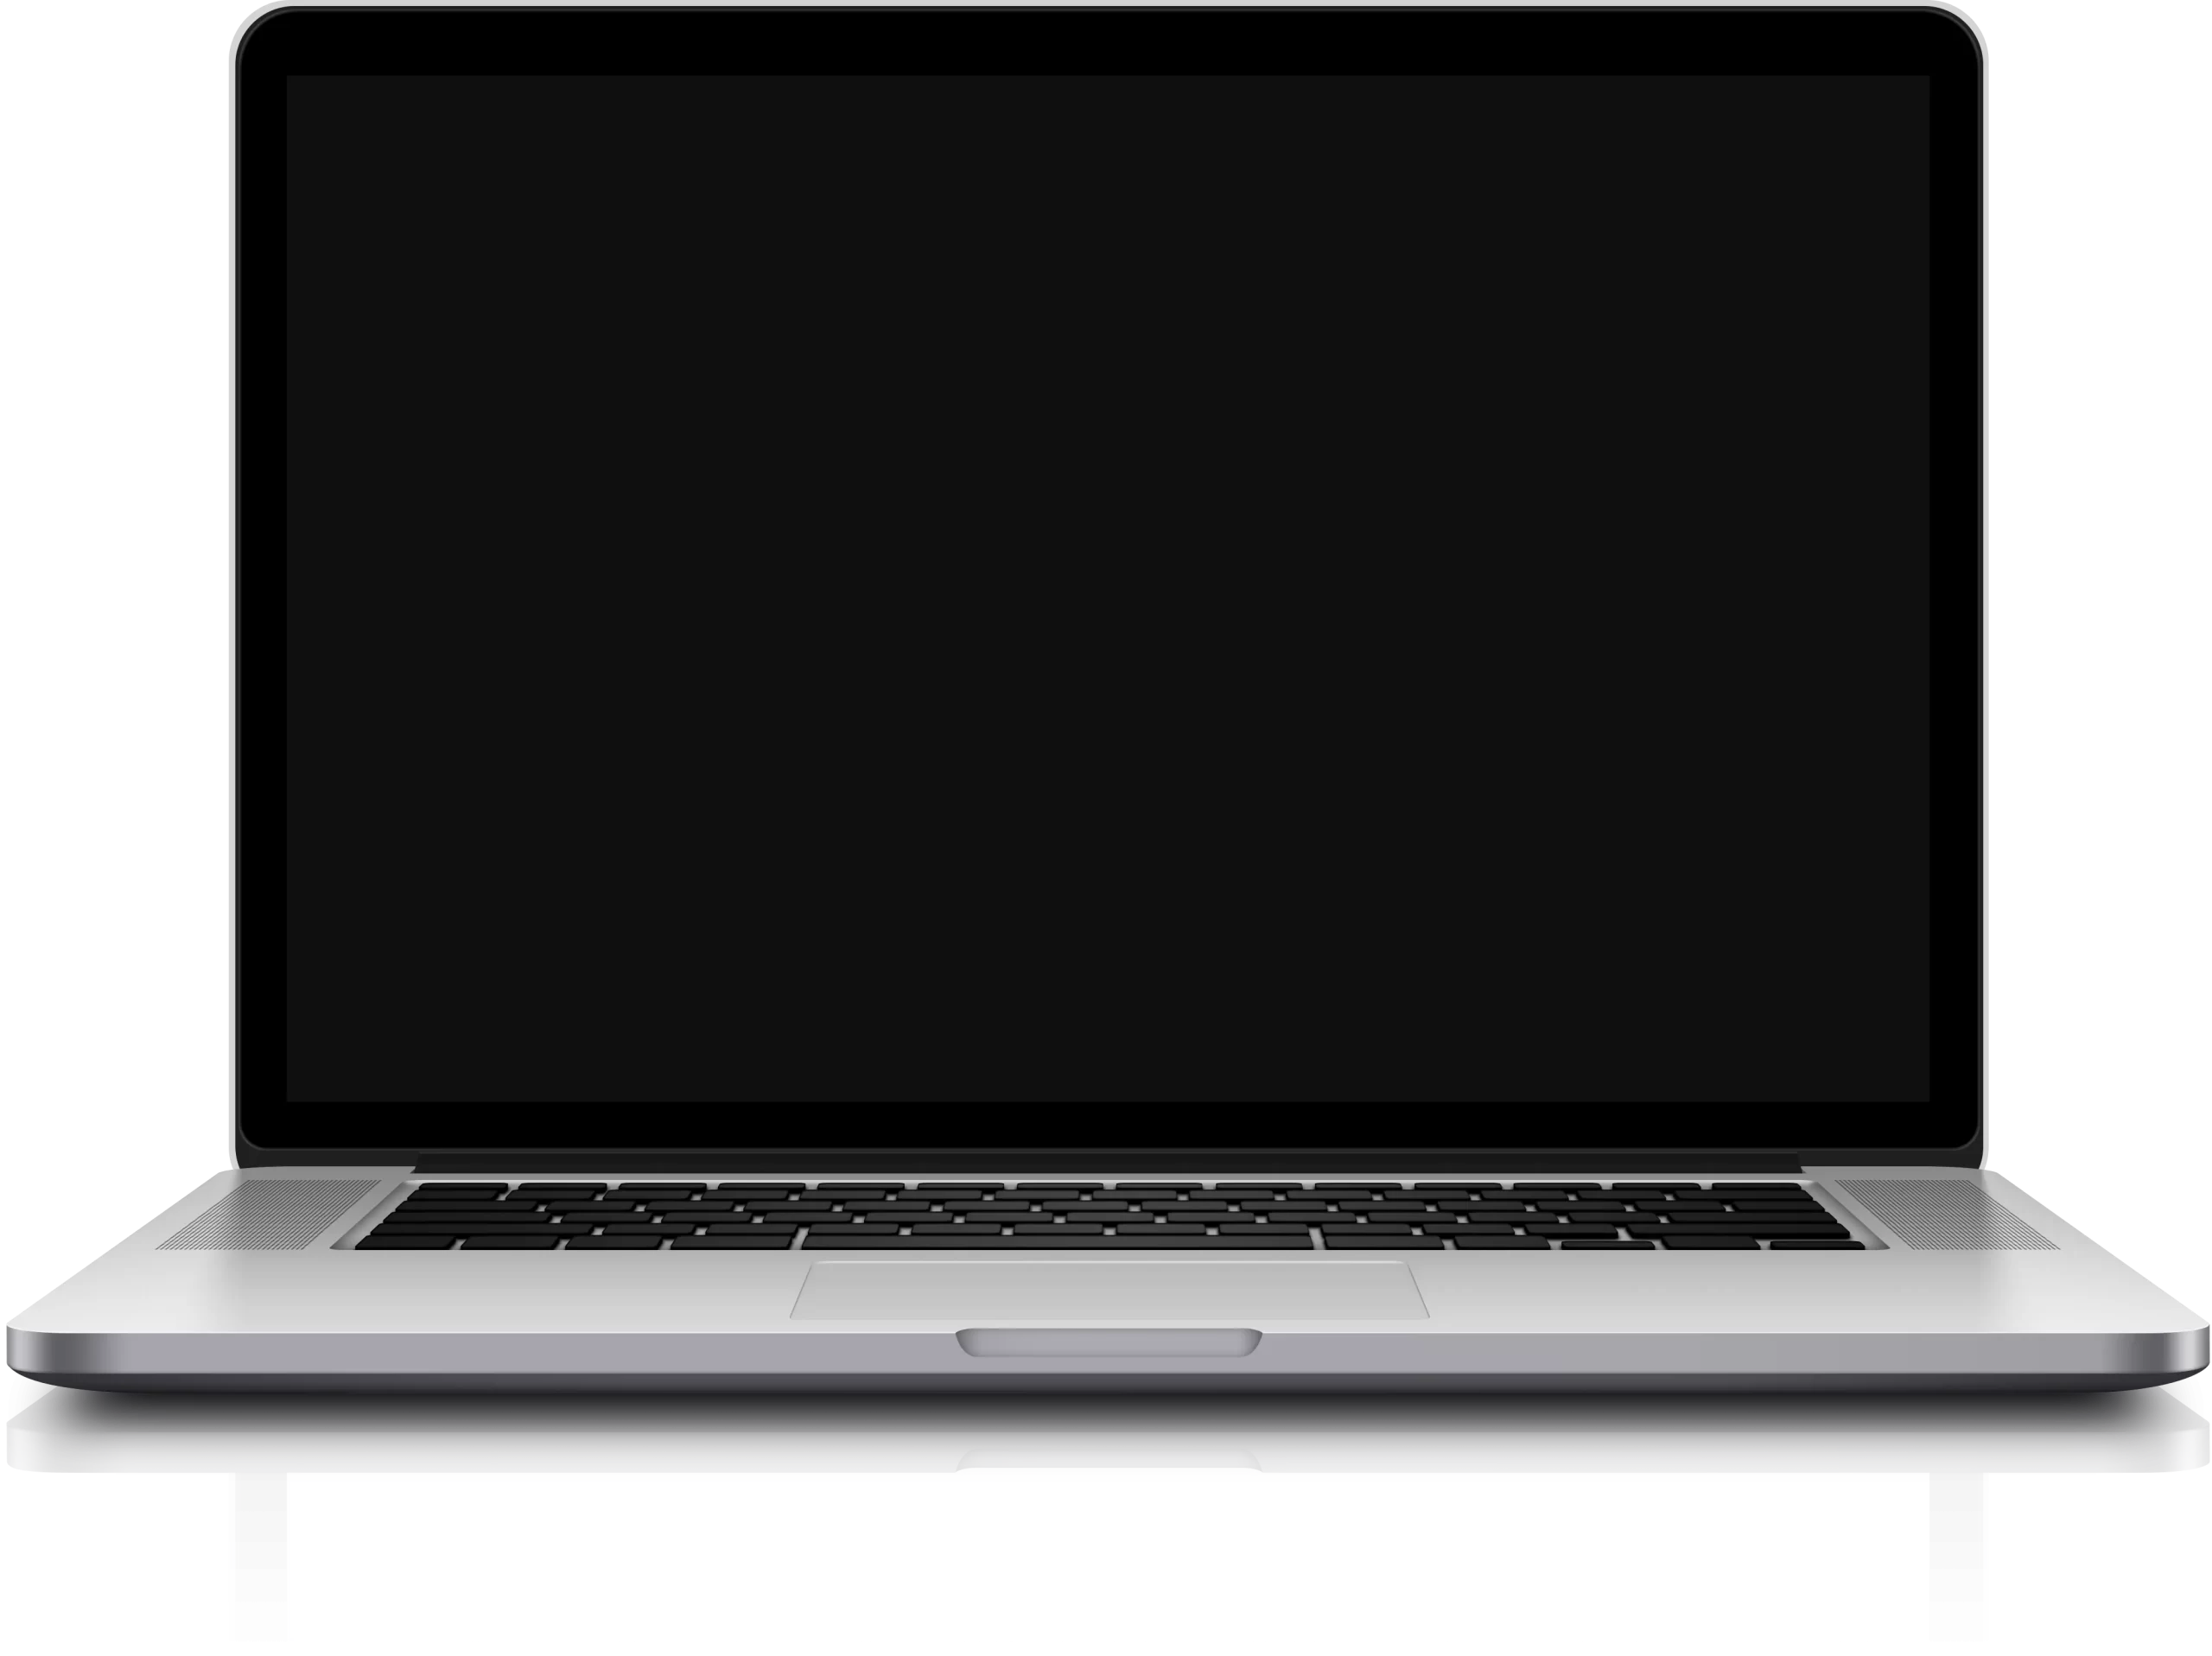 cara mengatasi laptop blank hitam tapi hidup